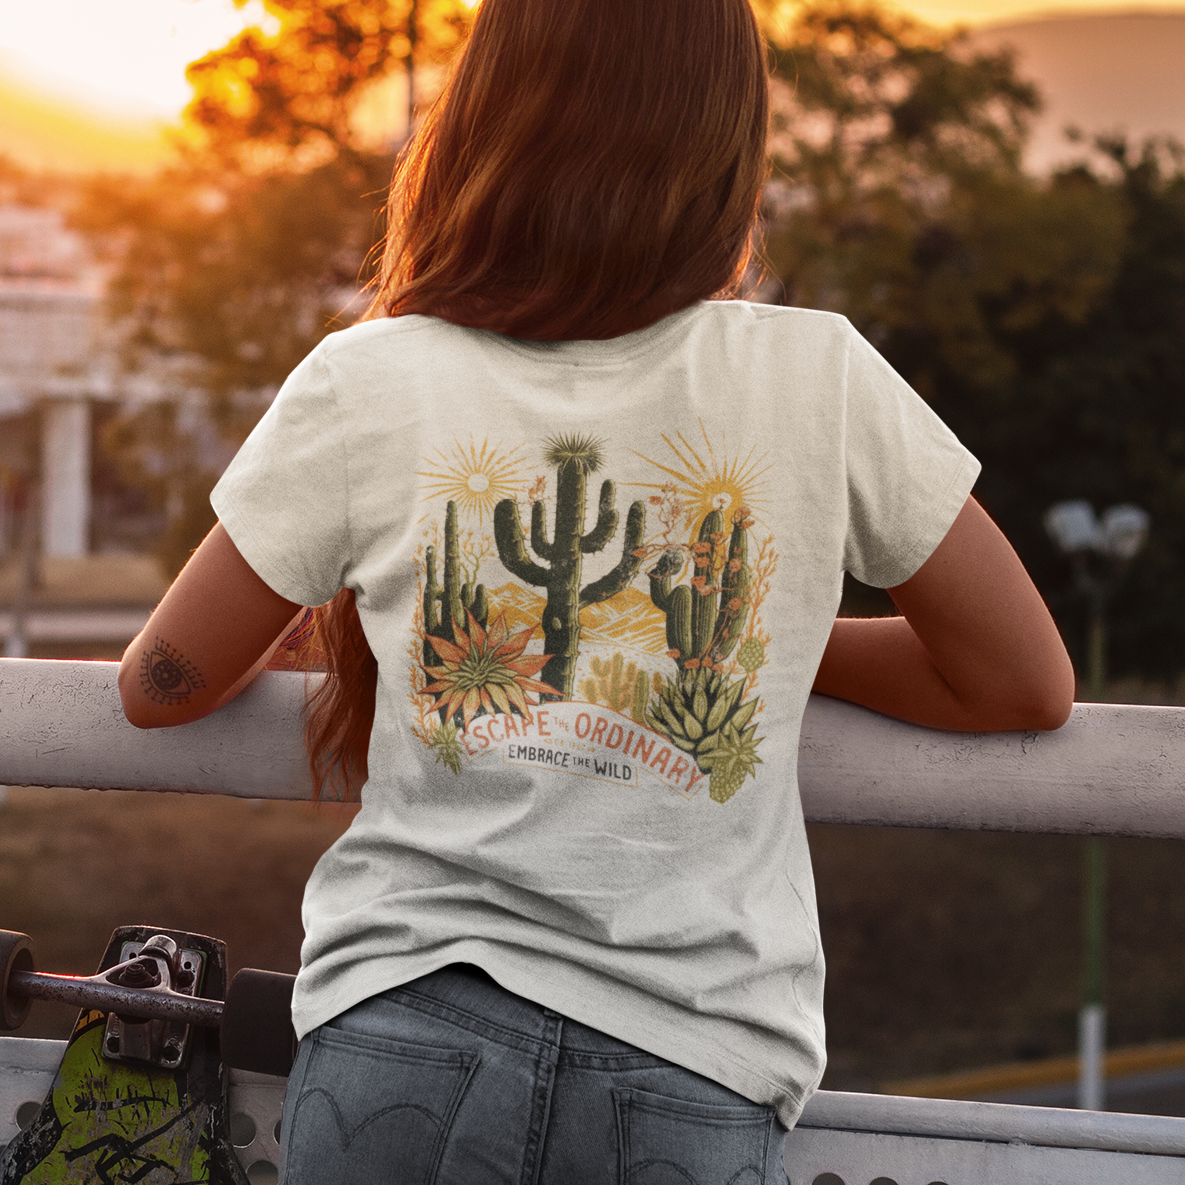 Escape the ordinary, embrace the wild - Desert cacti